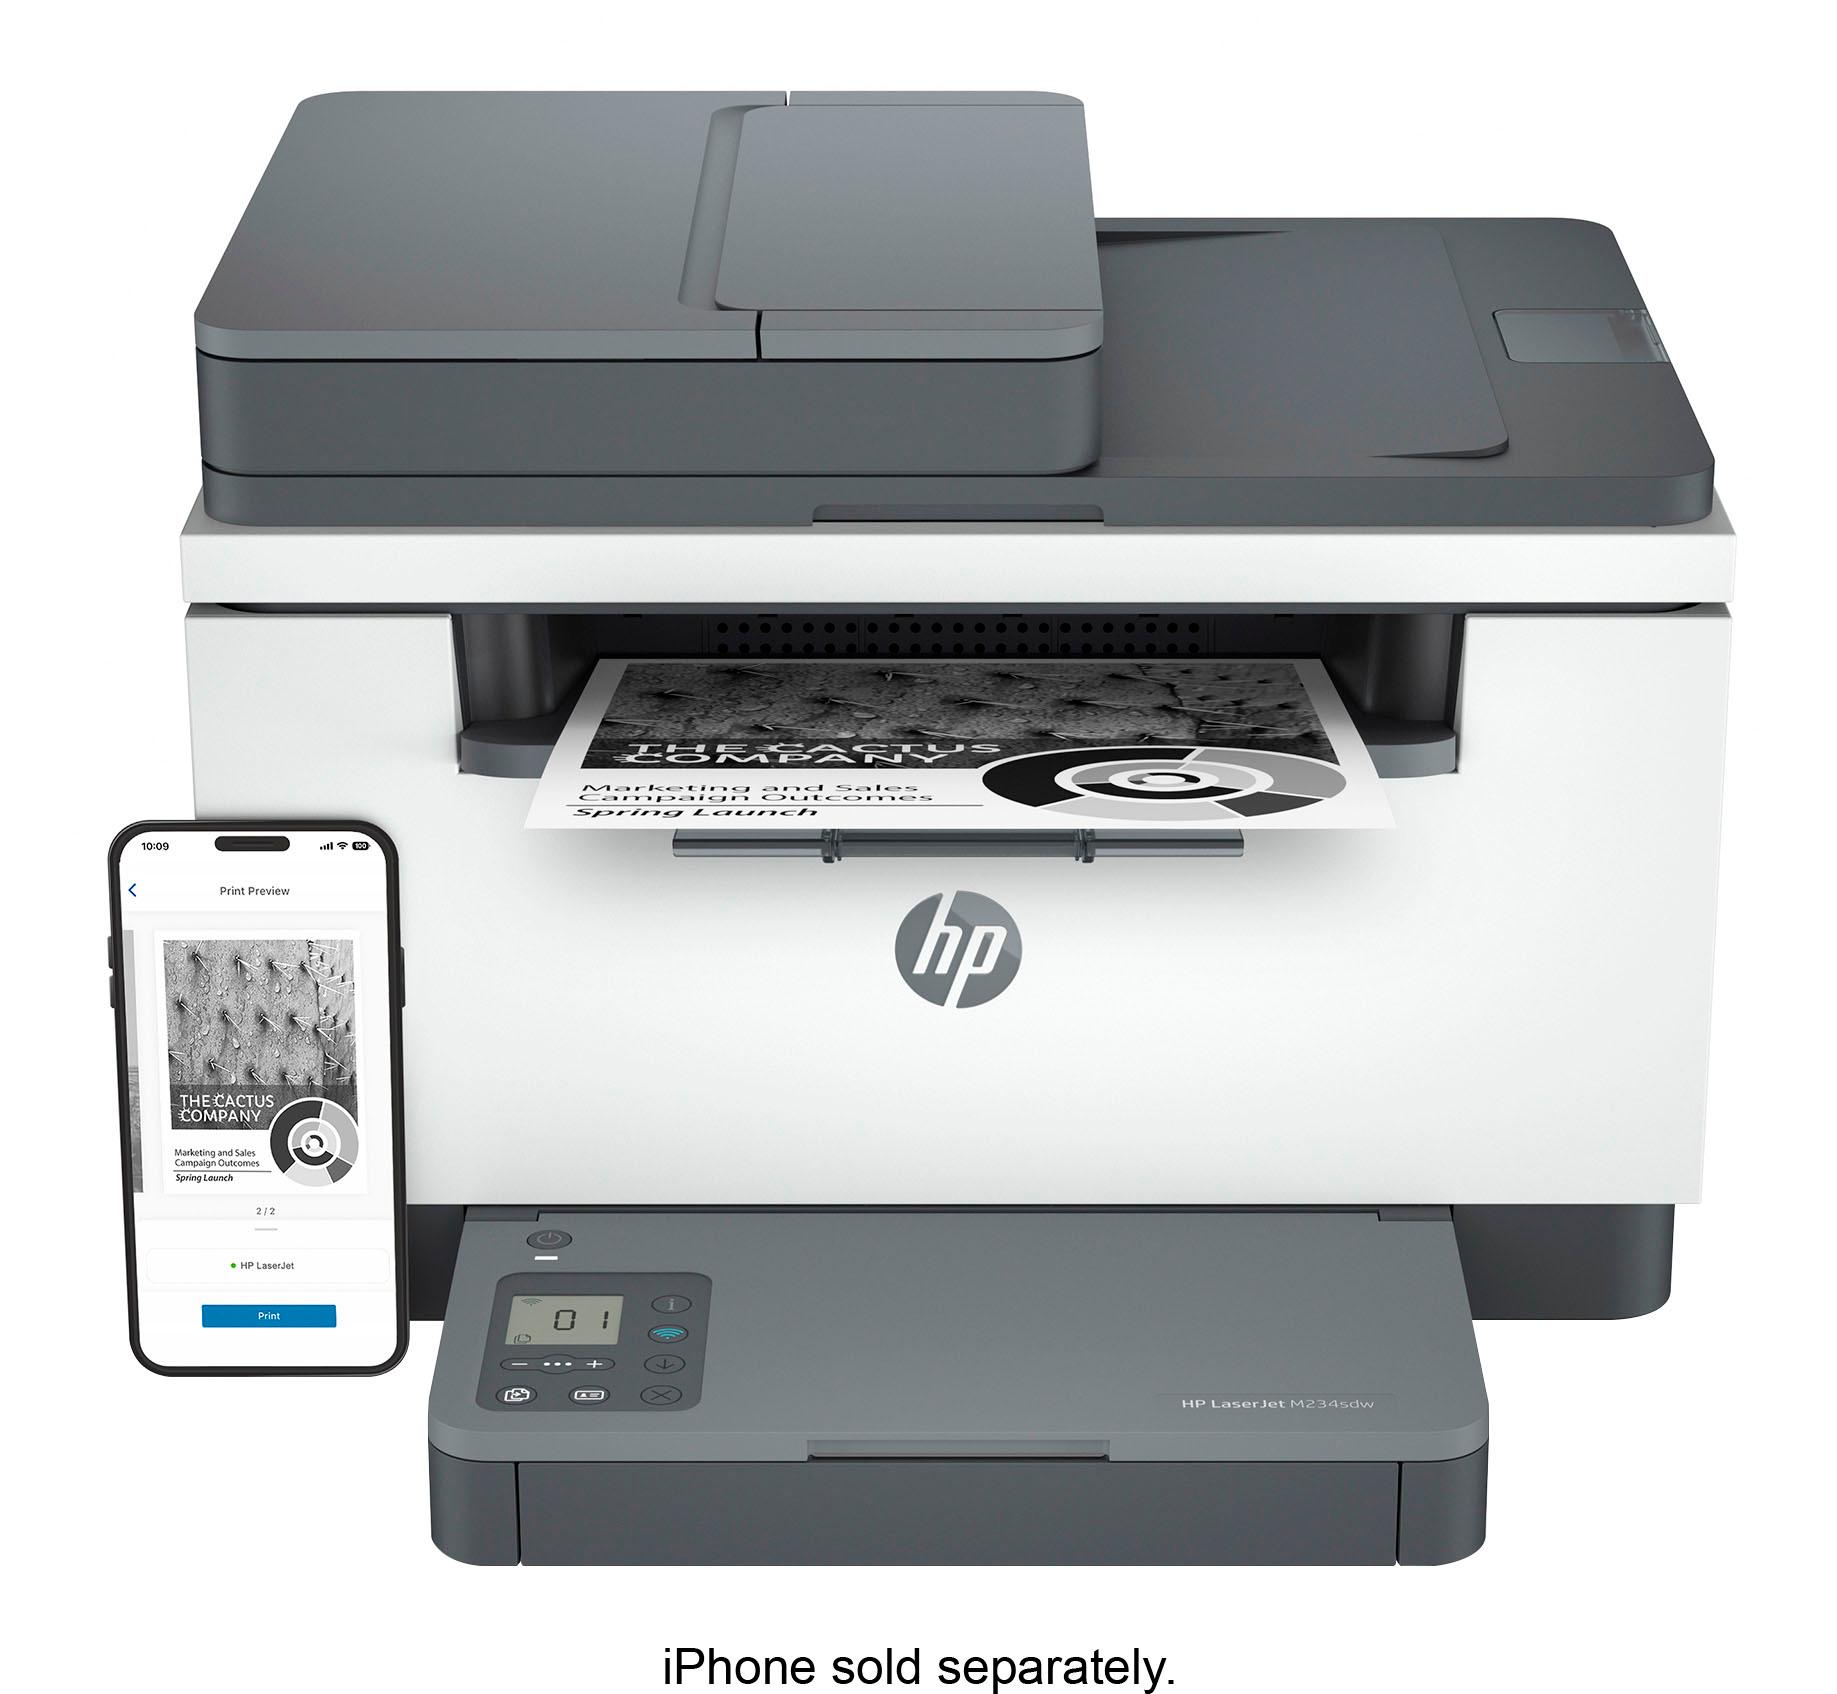 Angle View: HP - LaserJet M234sdw Wireless Black-and-White Laser Printer - White & Slate